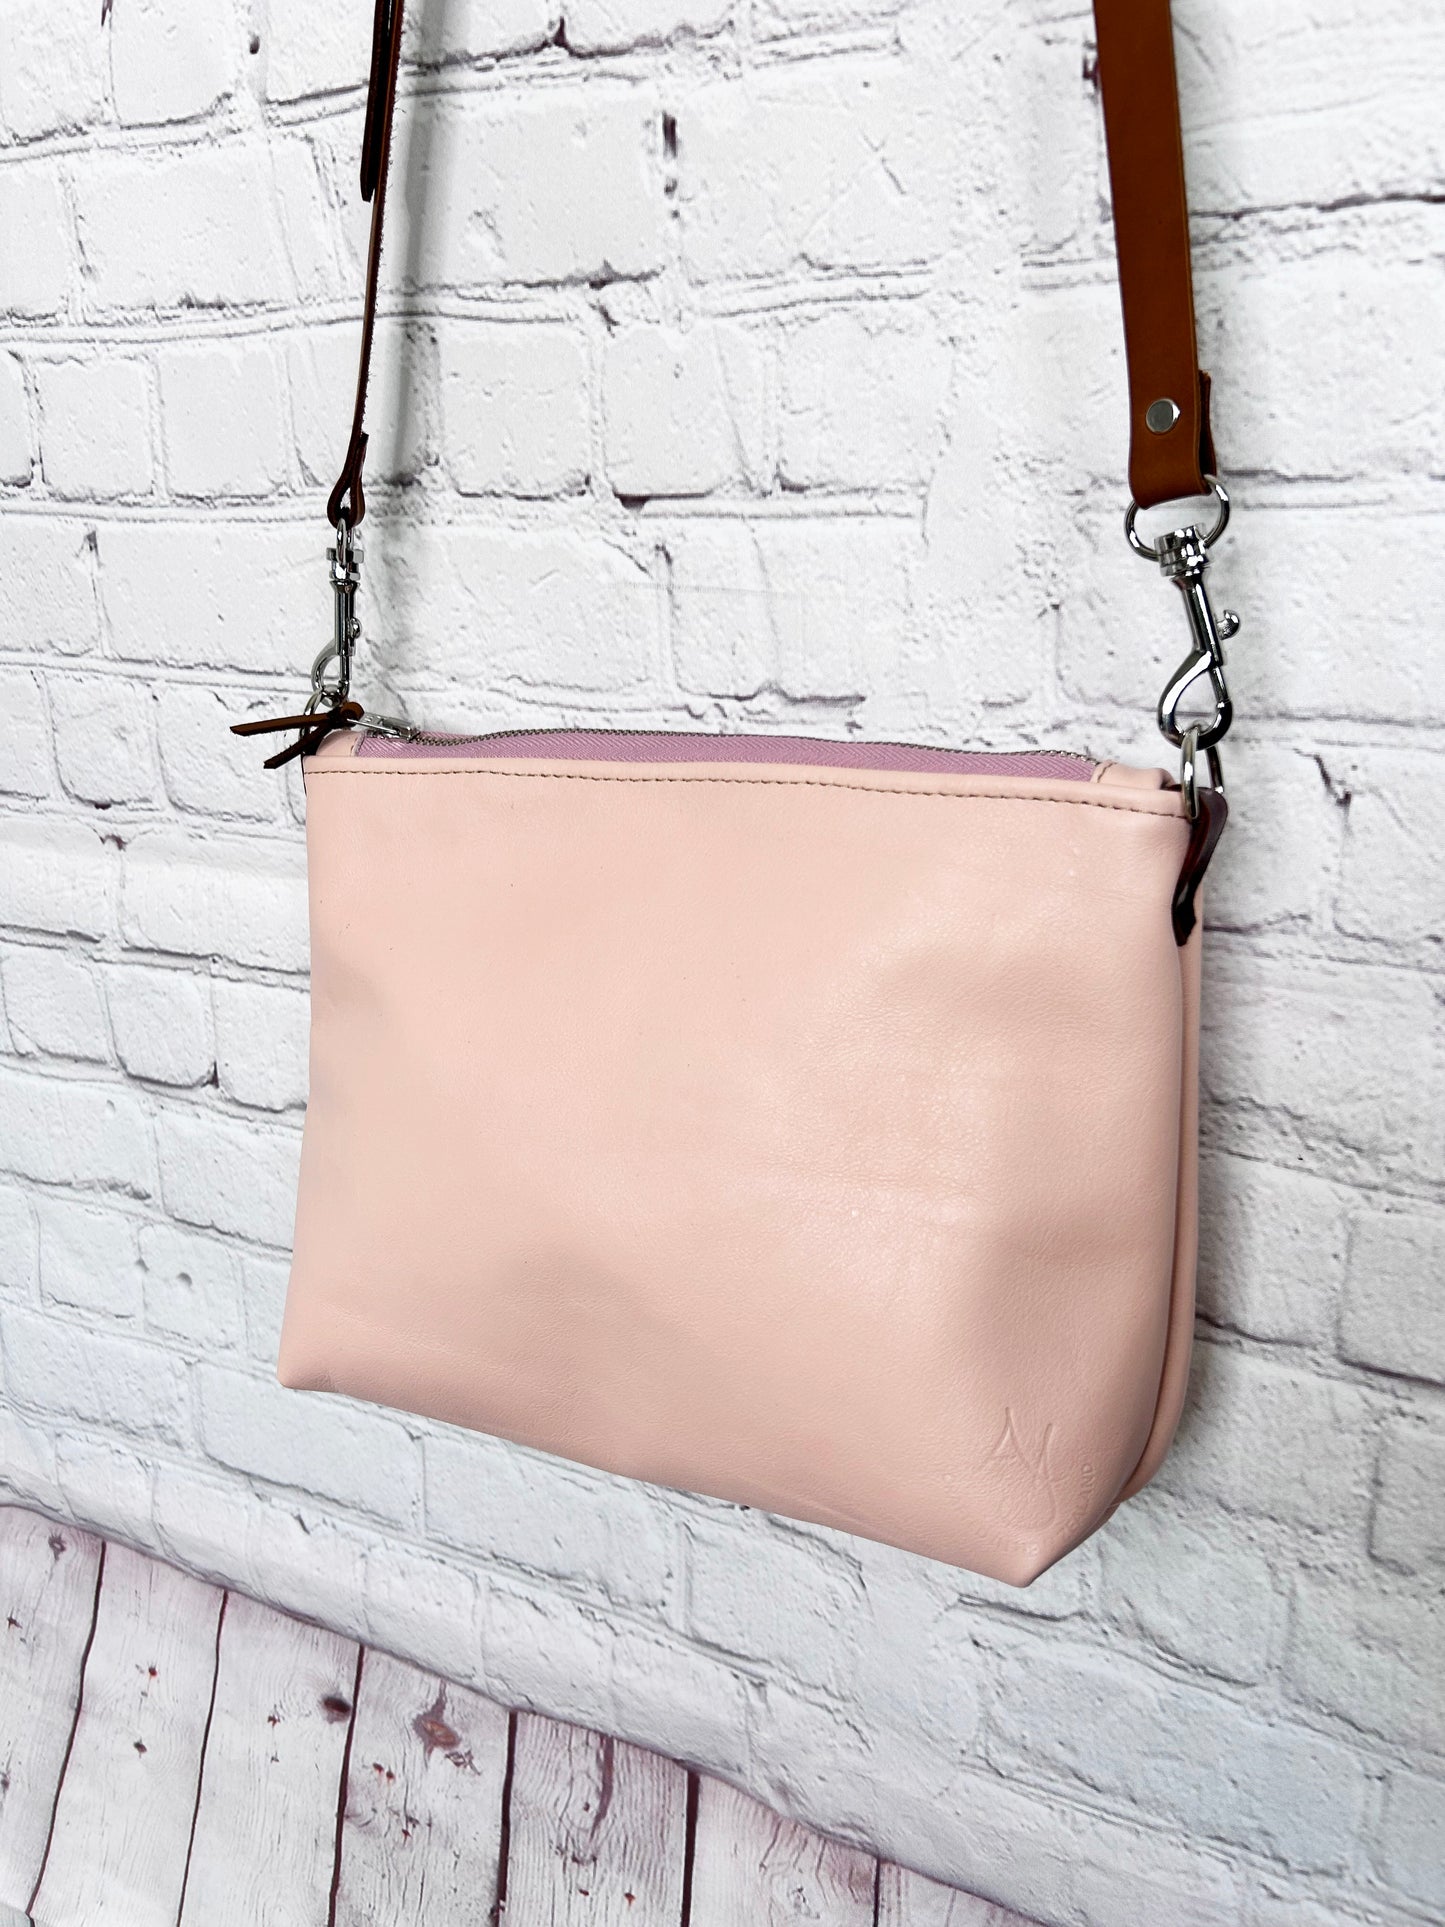 The Blush Pink Hayley Bag